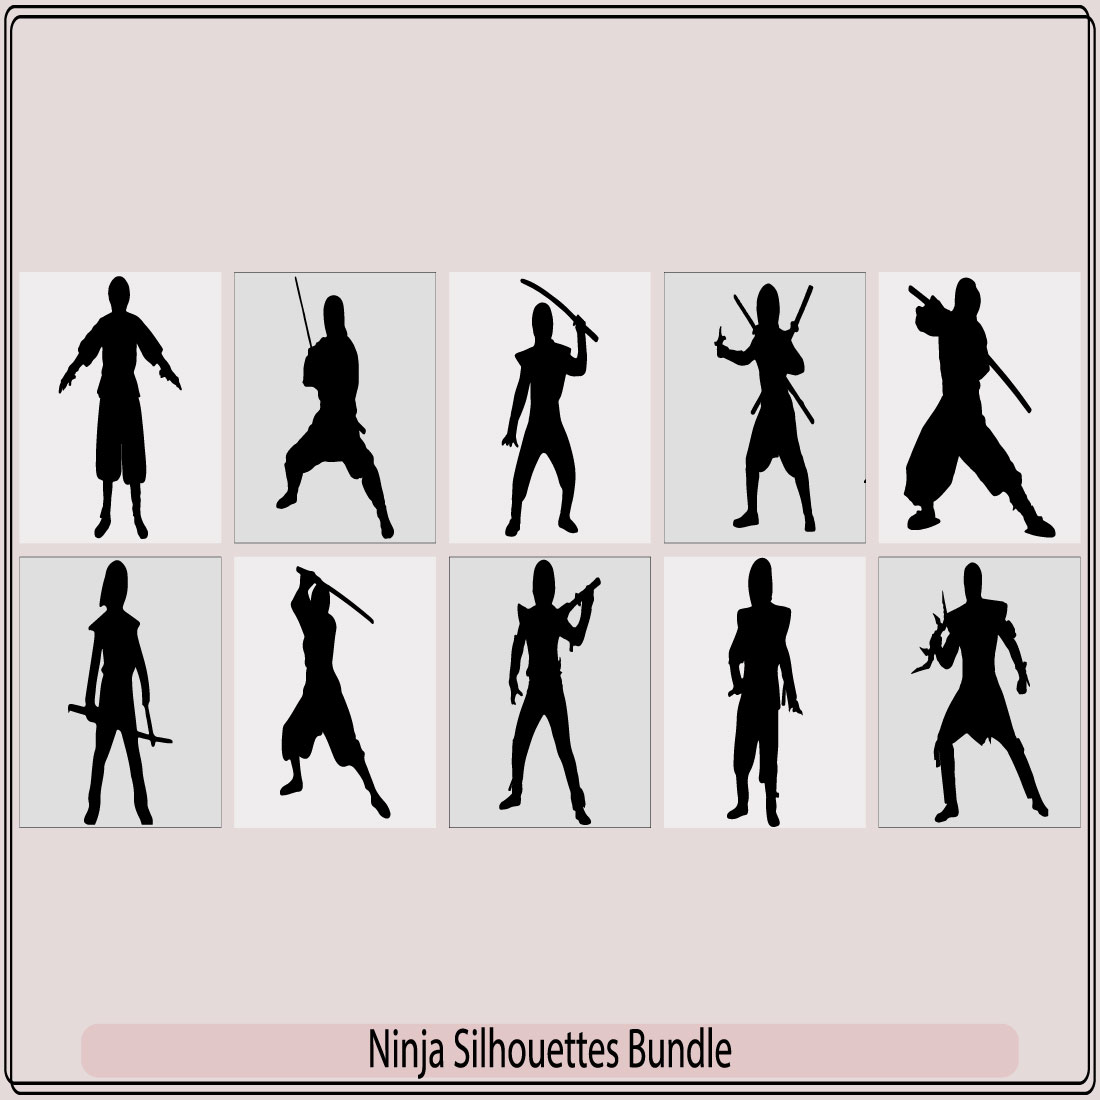 ninja silhouette vectors,Ninjas in various fighting poses silhouette vector illustration preview image.